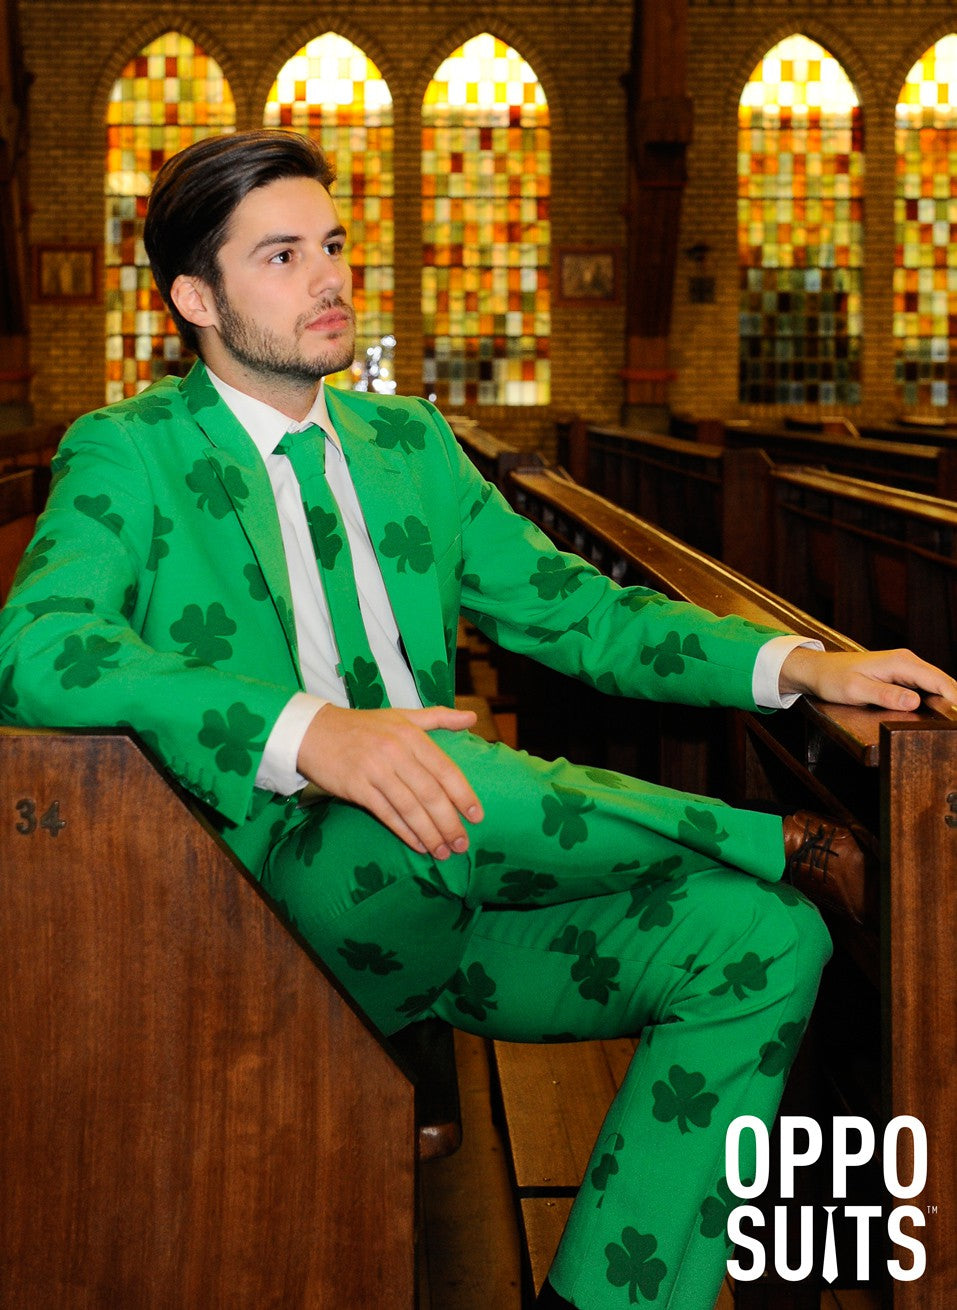 Costume St Patrick - Opposuits | veste, pantalon , cravate | J2F Shop